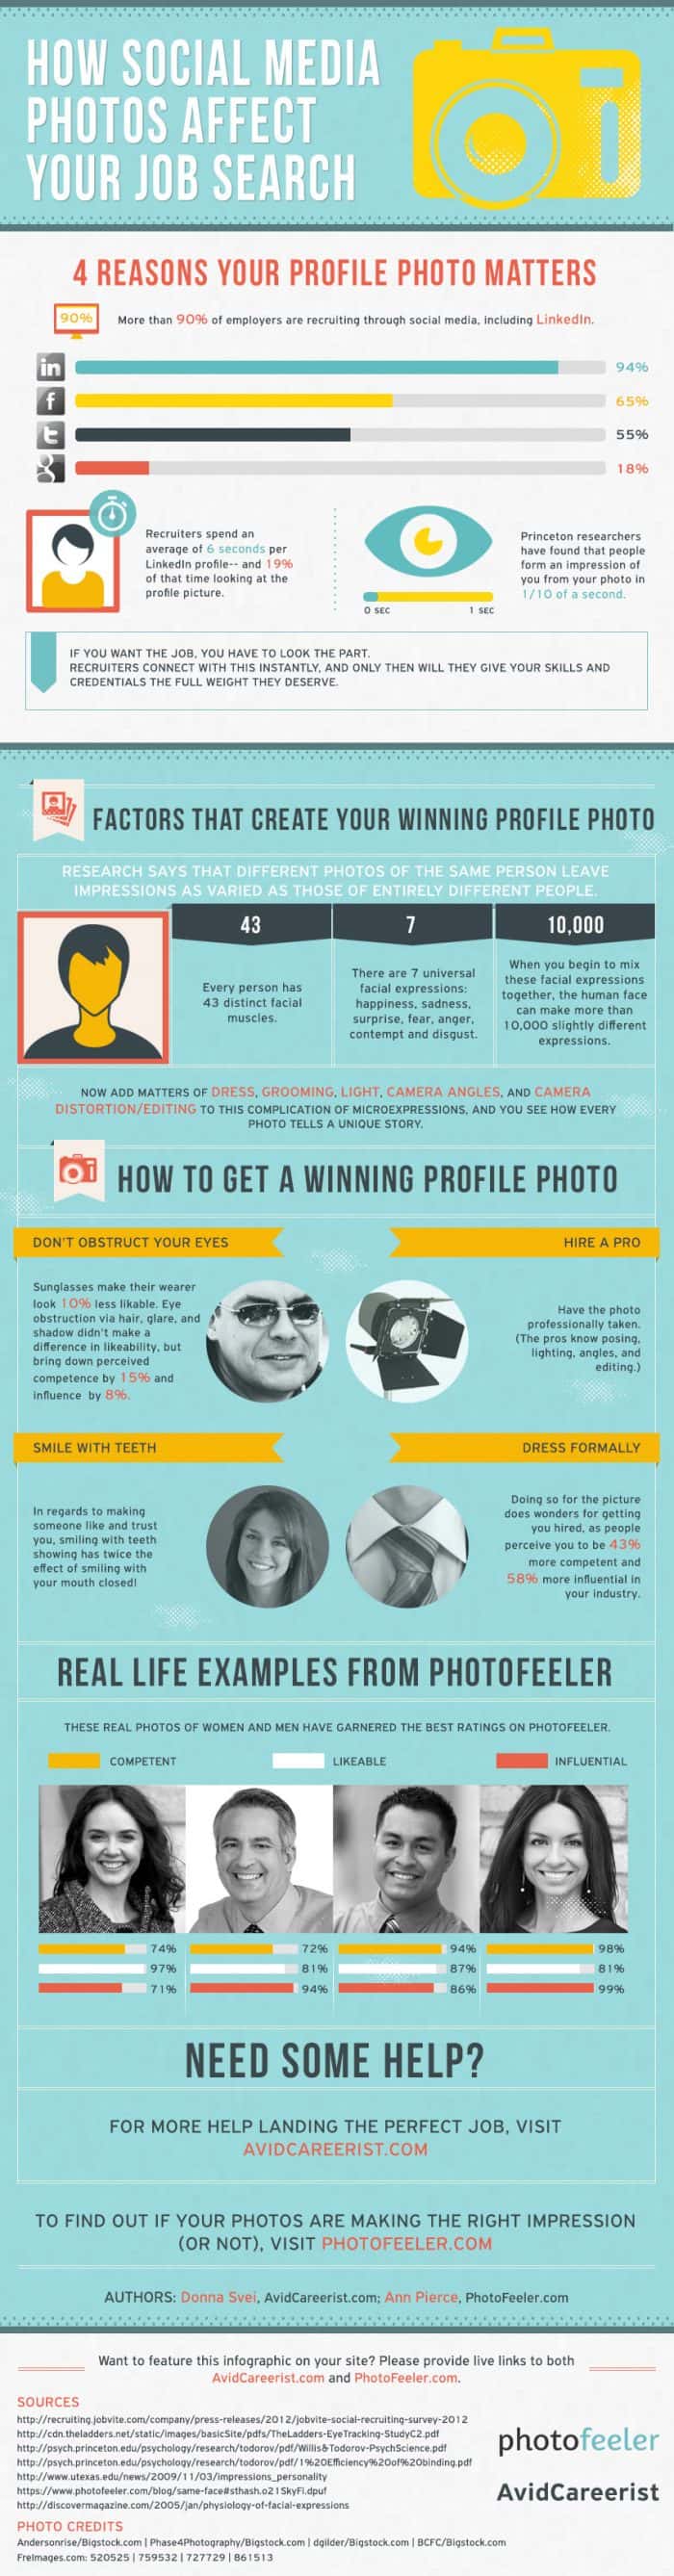 How Social Media Photos Affect Your Job Search